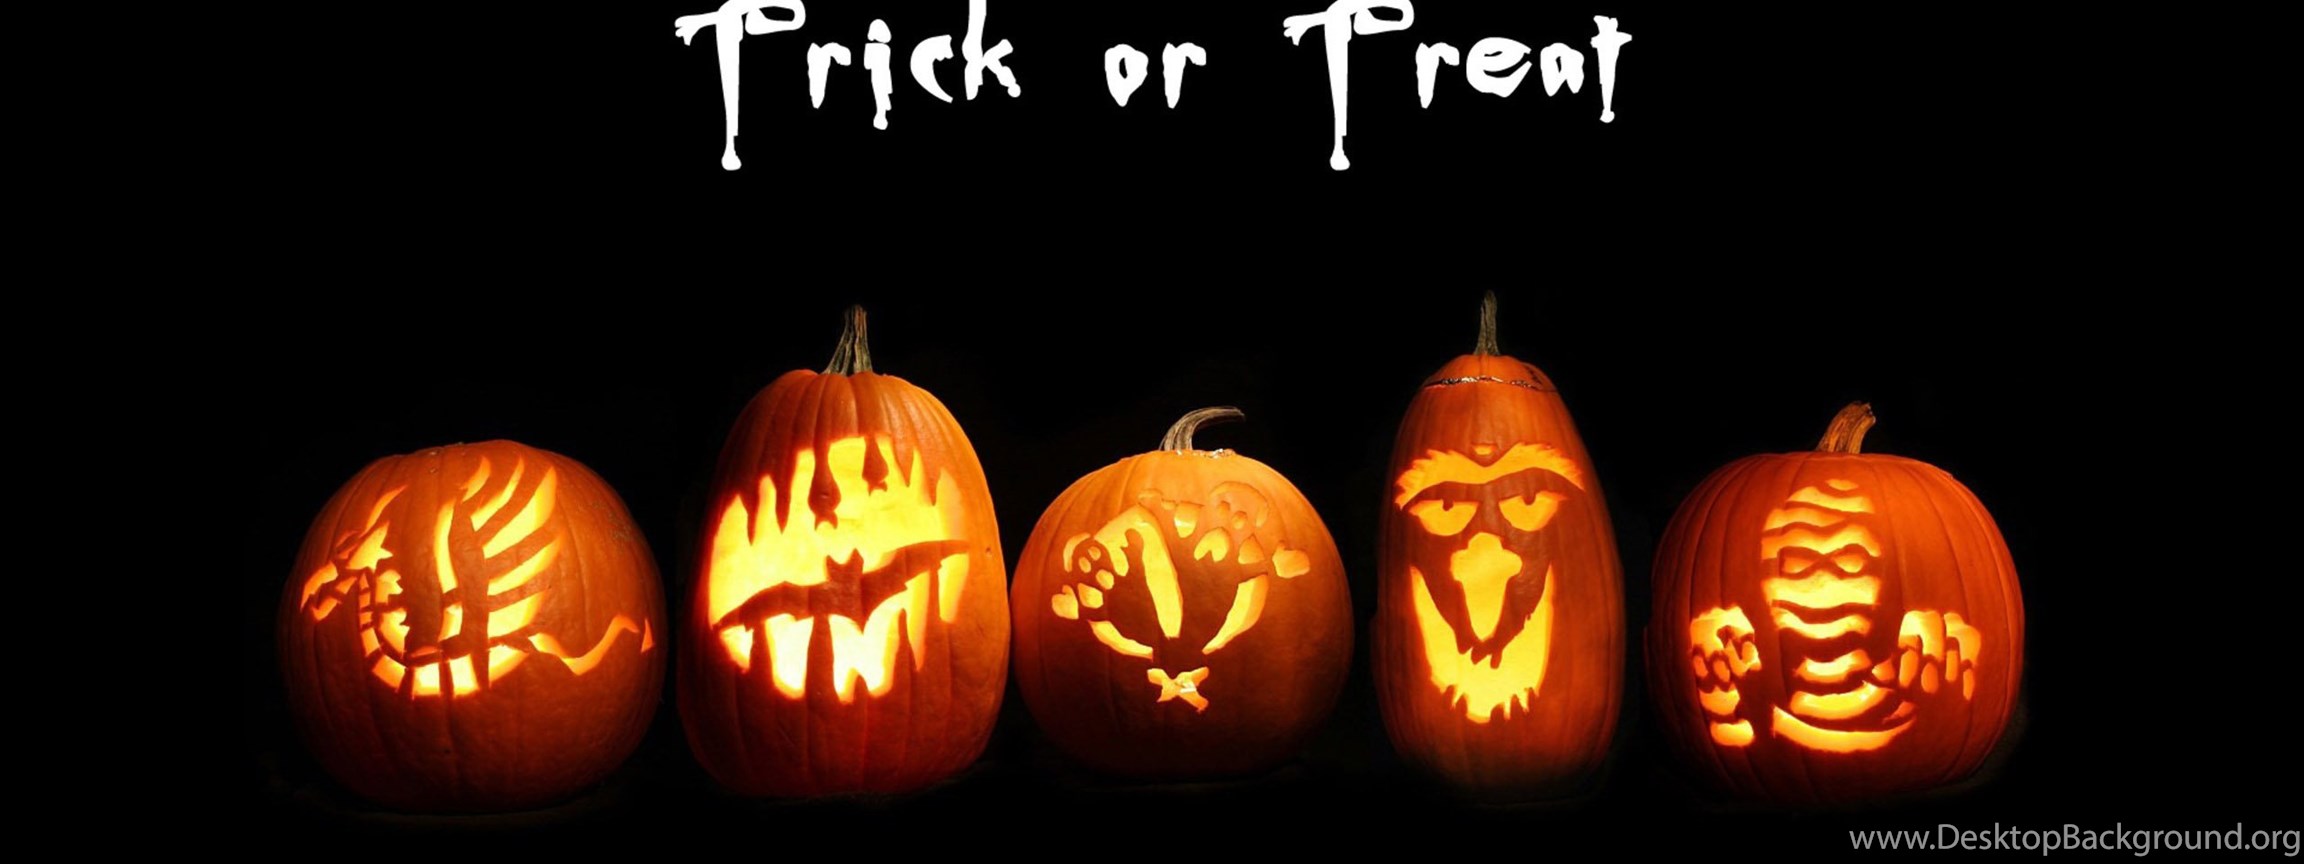 Download Trick Or Treat Halloween Wallpapers Widescreen Dual Screen Wide 23...